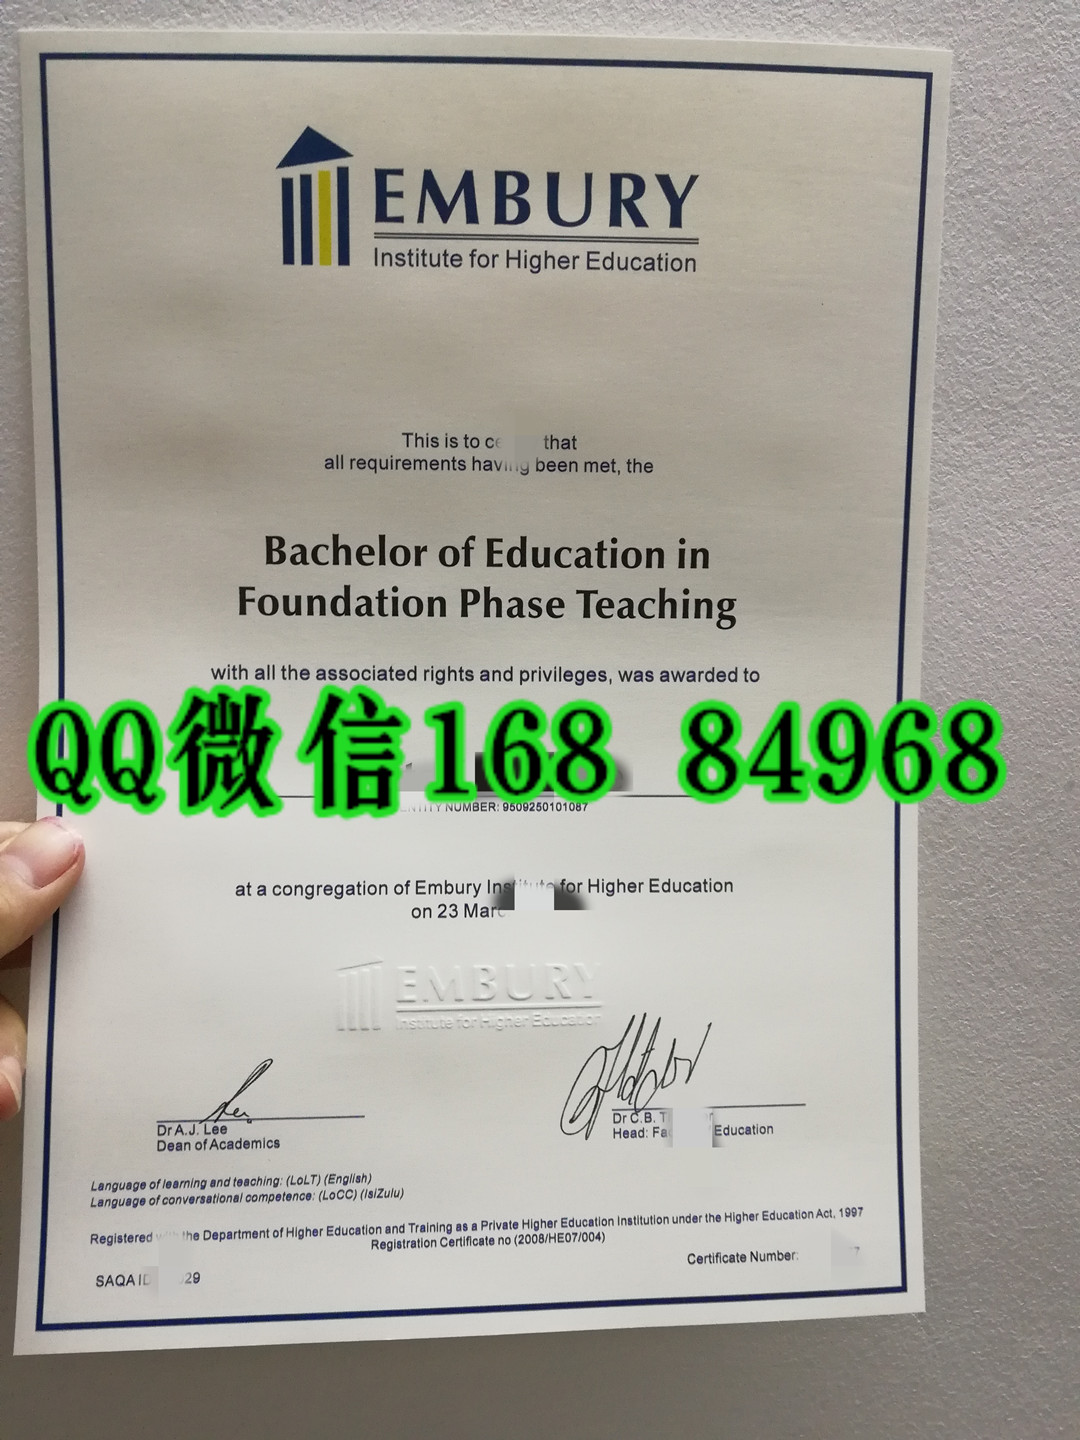 Embury Institute for Higher Education diploma certificate